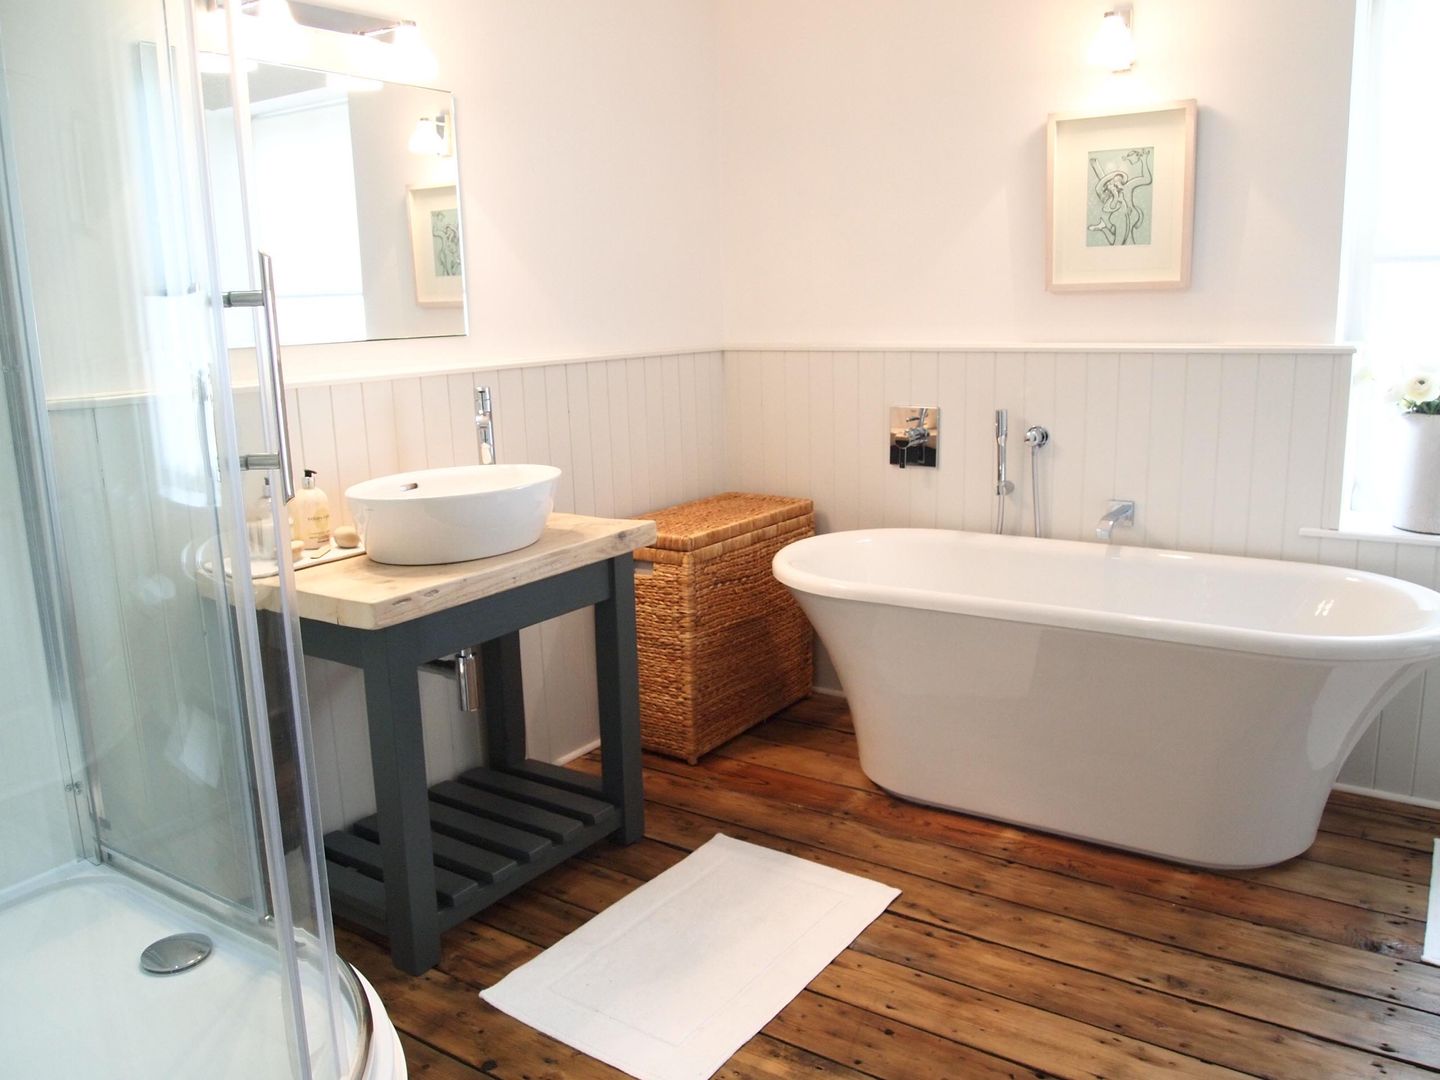 Country Style Bathroom, DeVal Bathrooms DeVal Bathrooms حمام Burlington,Merlyn,welcoming,natural materials